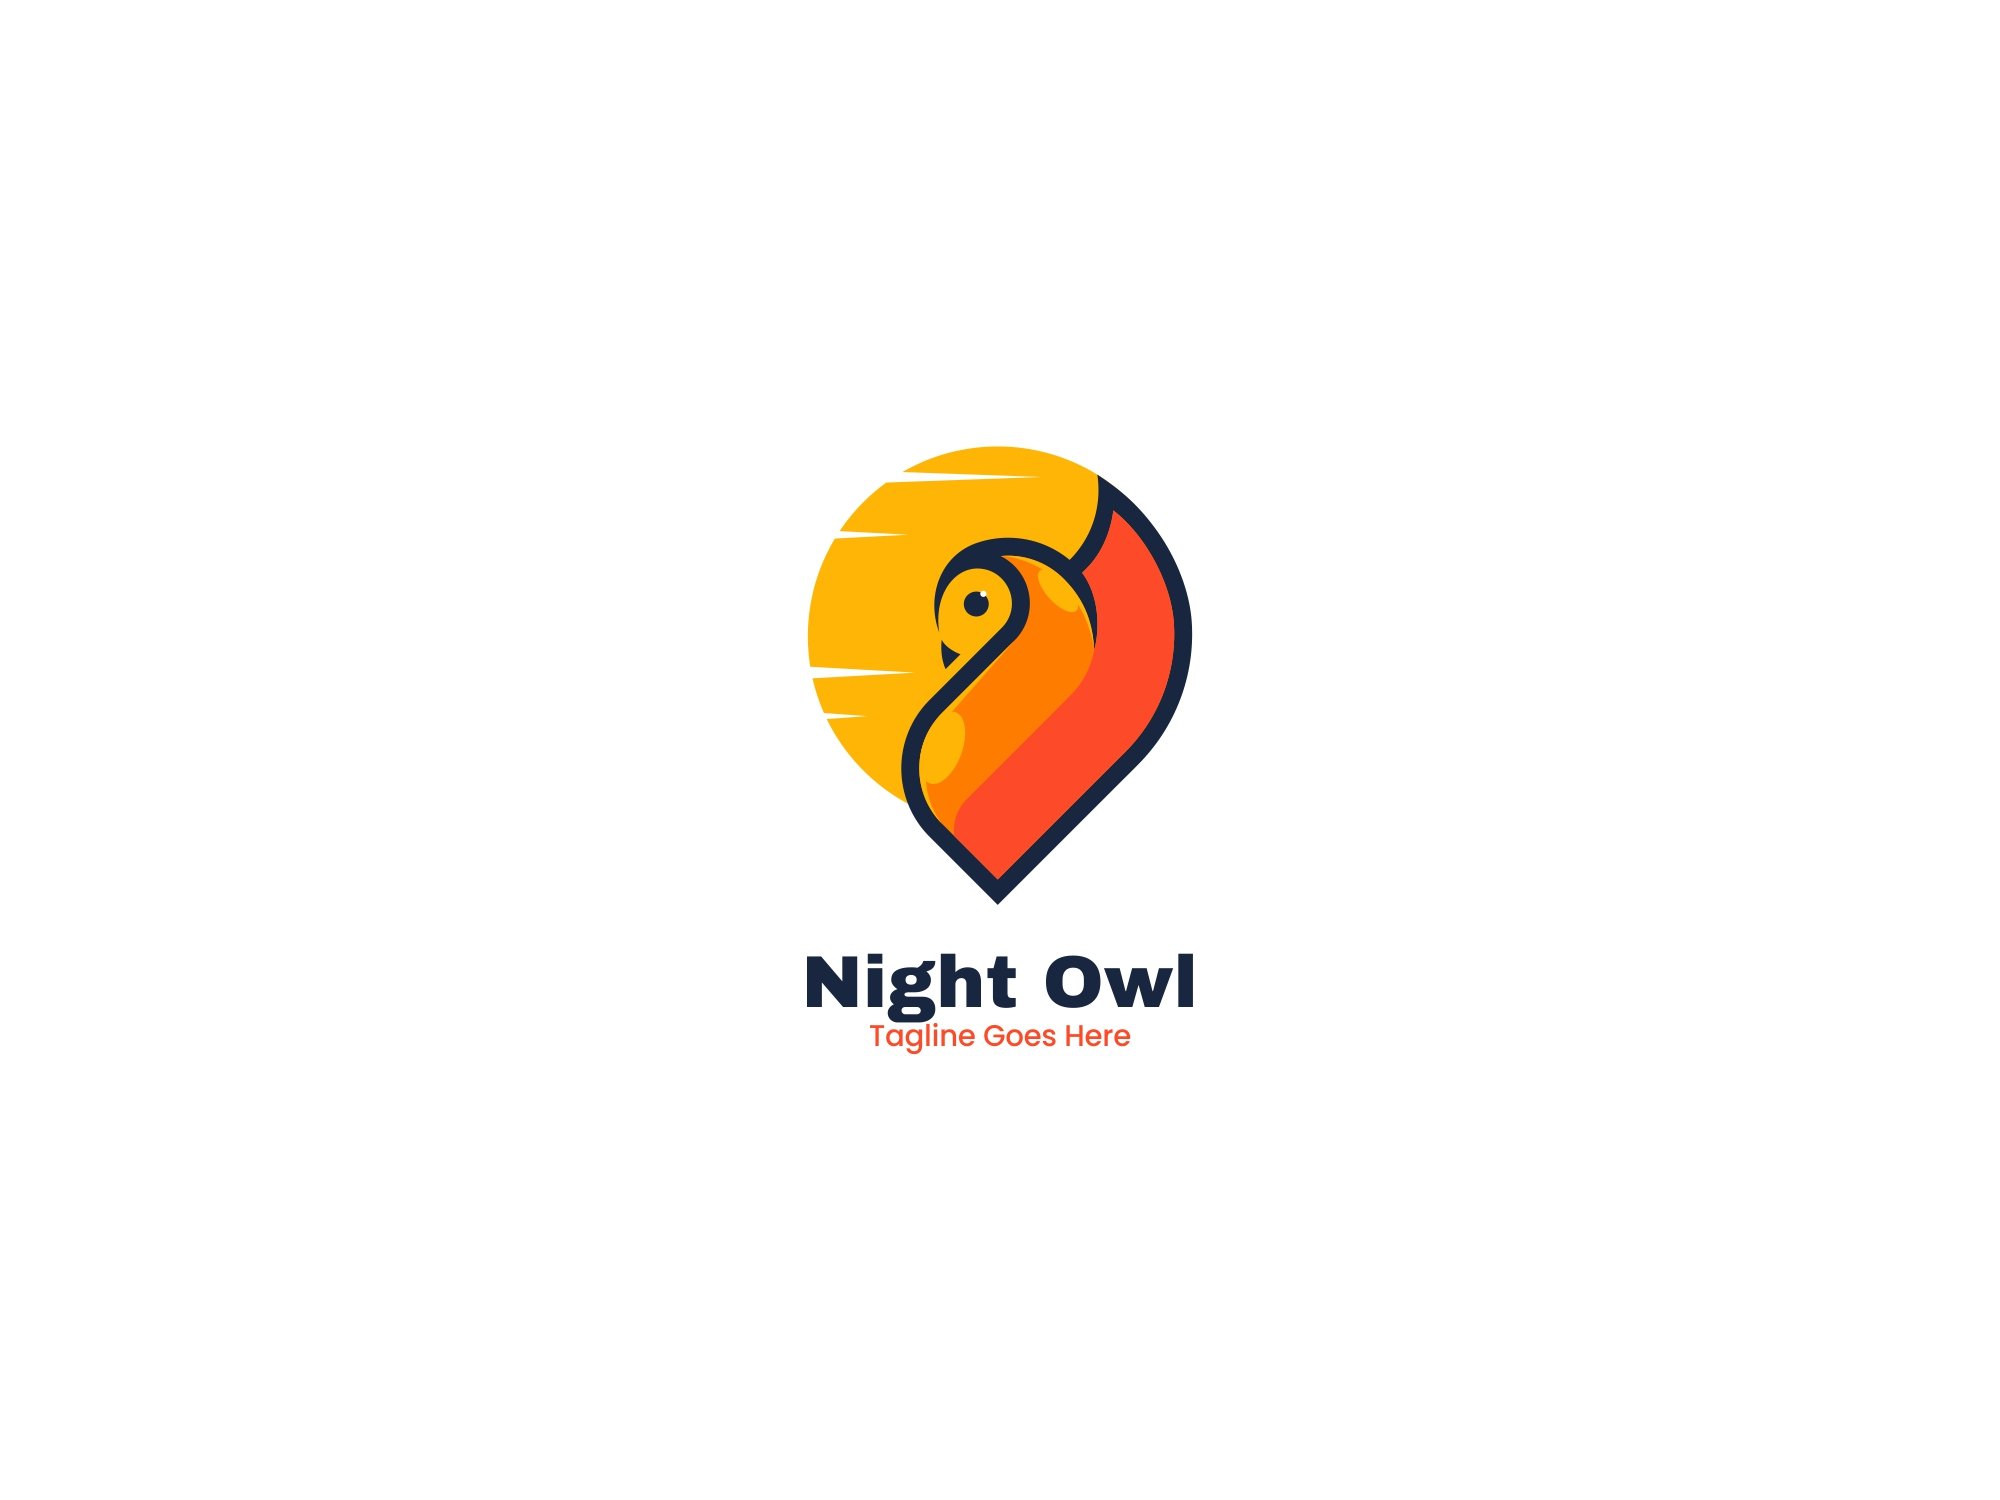 Night Owl Simple Mascot Logo cover image.